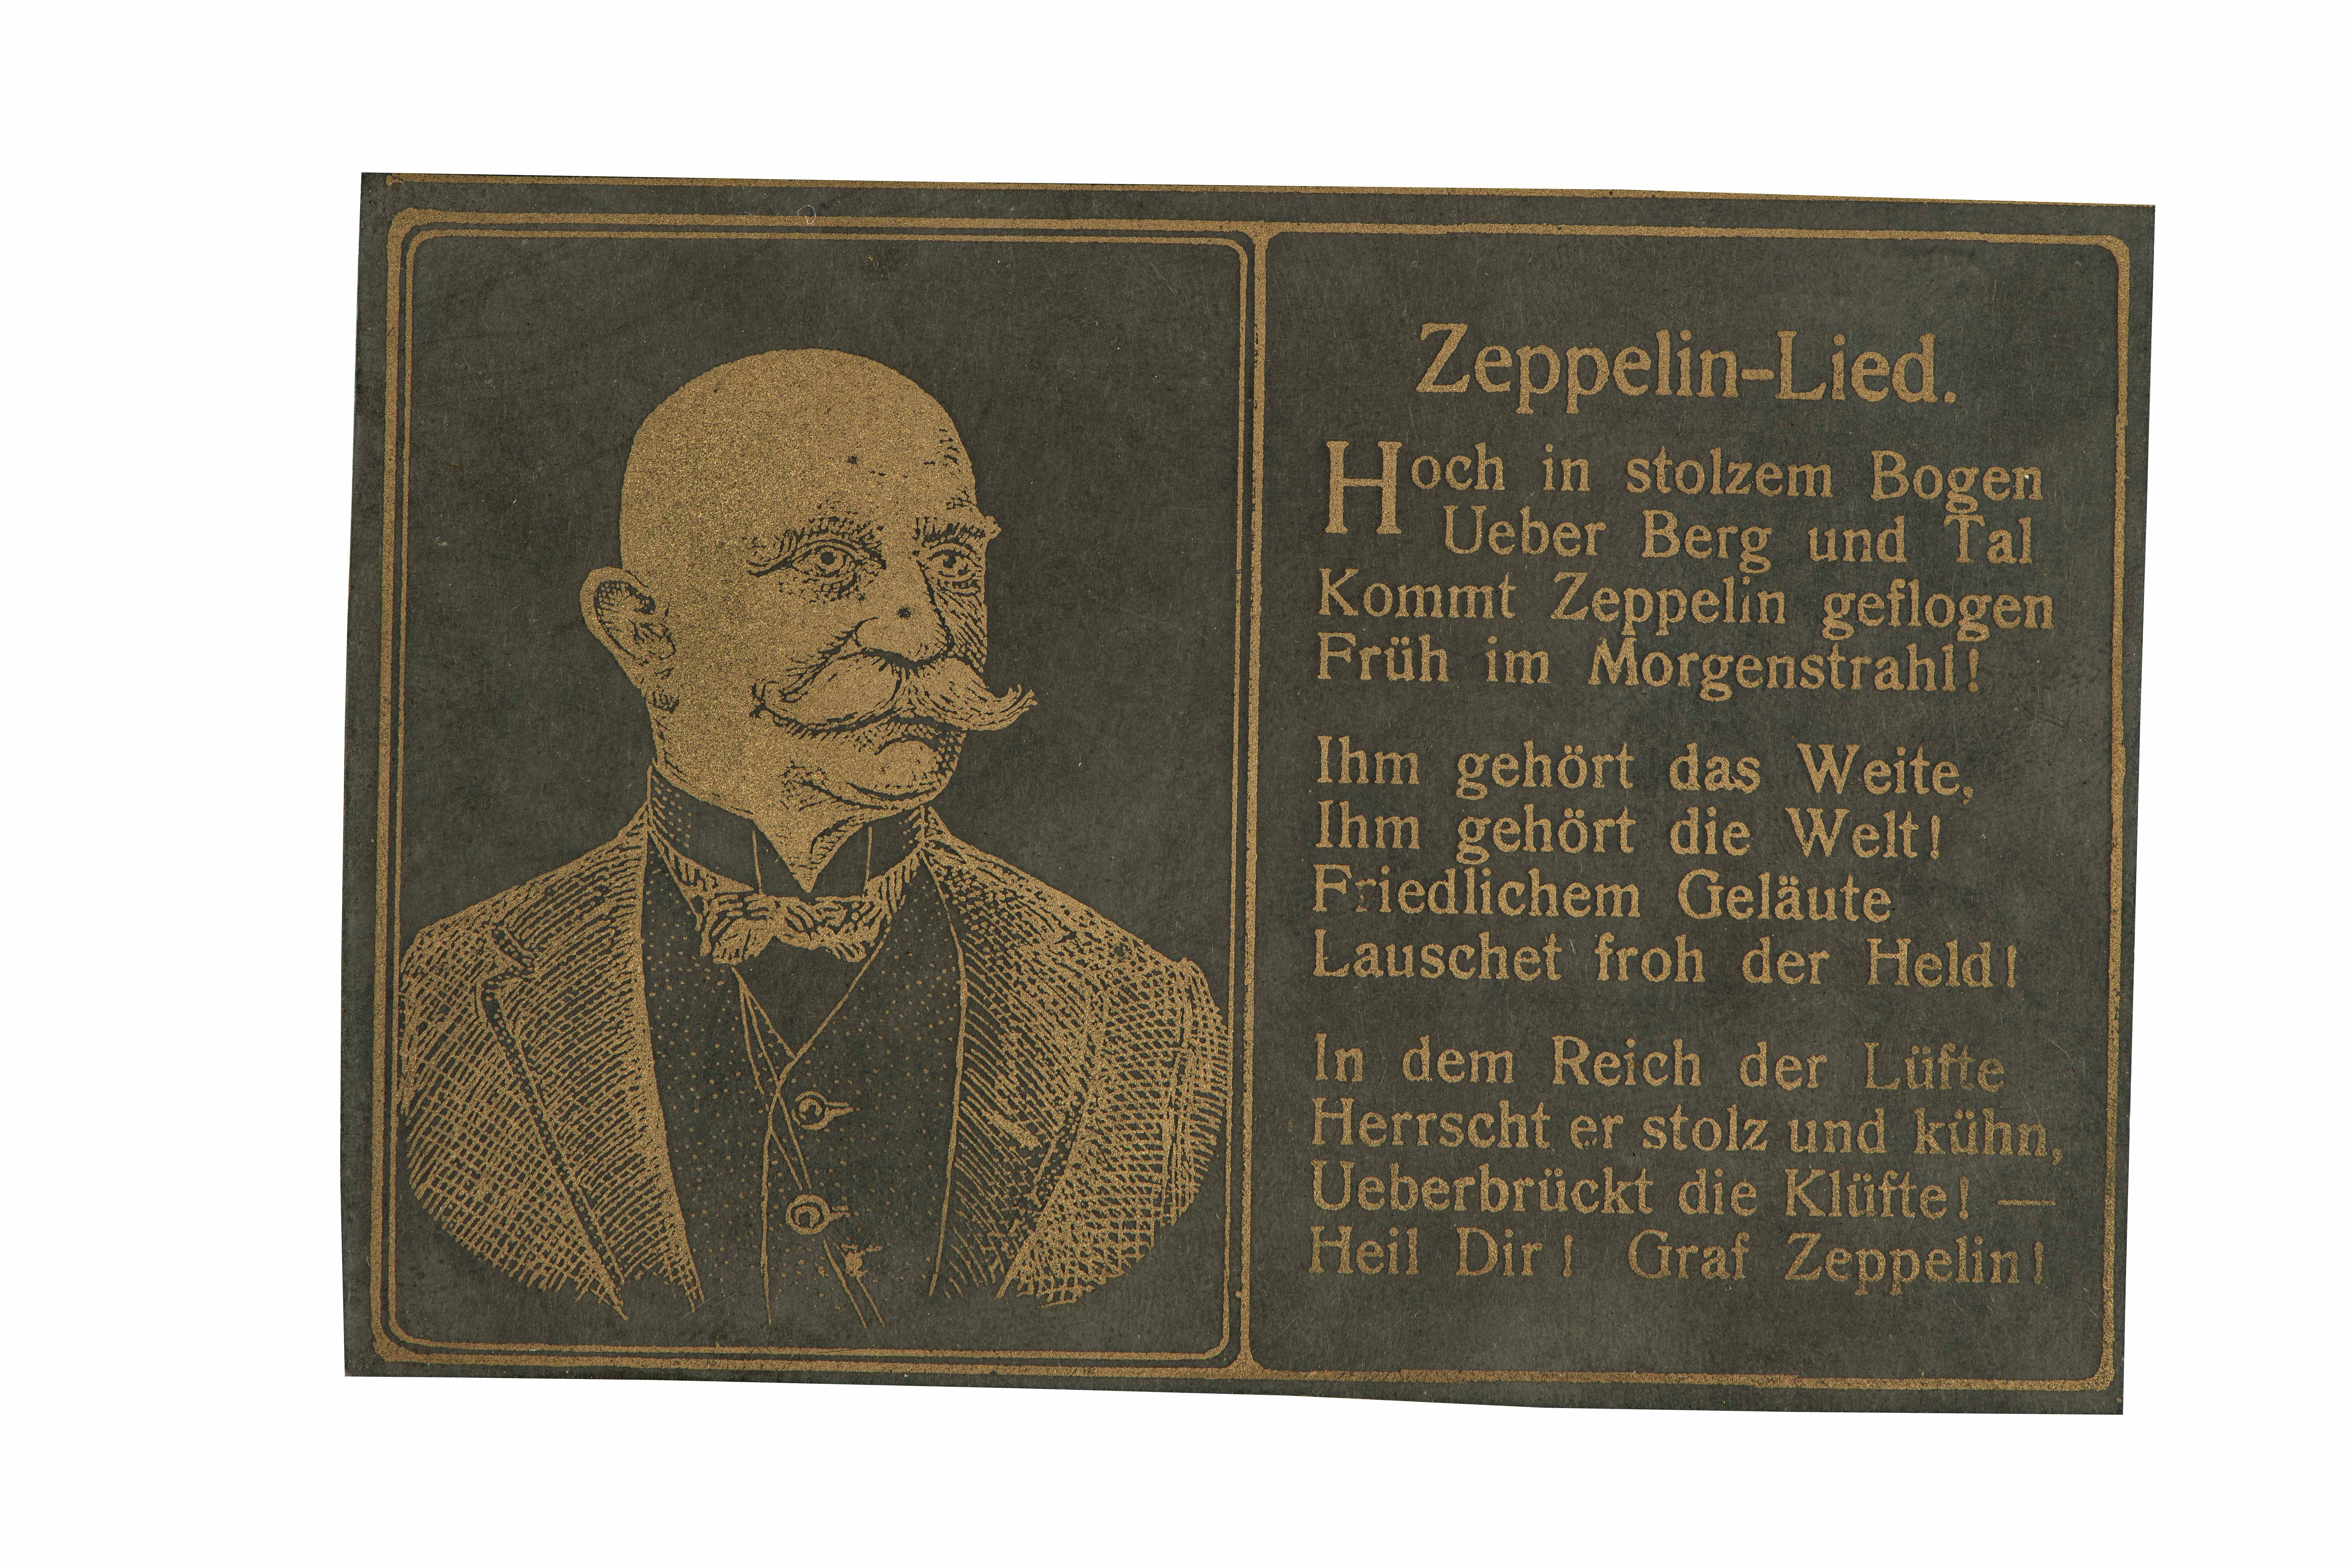 Hauchbild: Zeppelin-Lied (Zeppelin Museum Friedrichshafen GmbH CC BY-NC-SA)